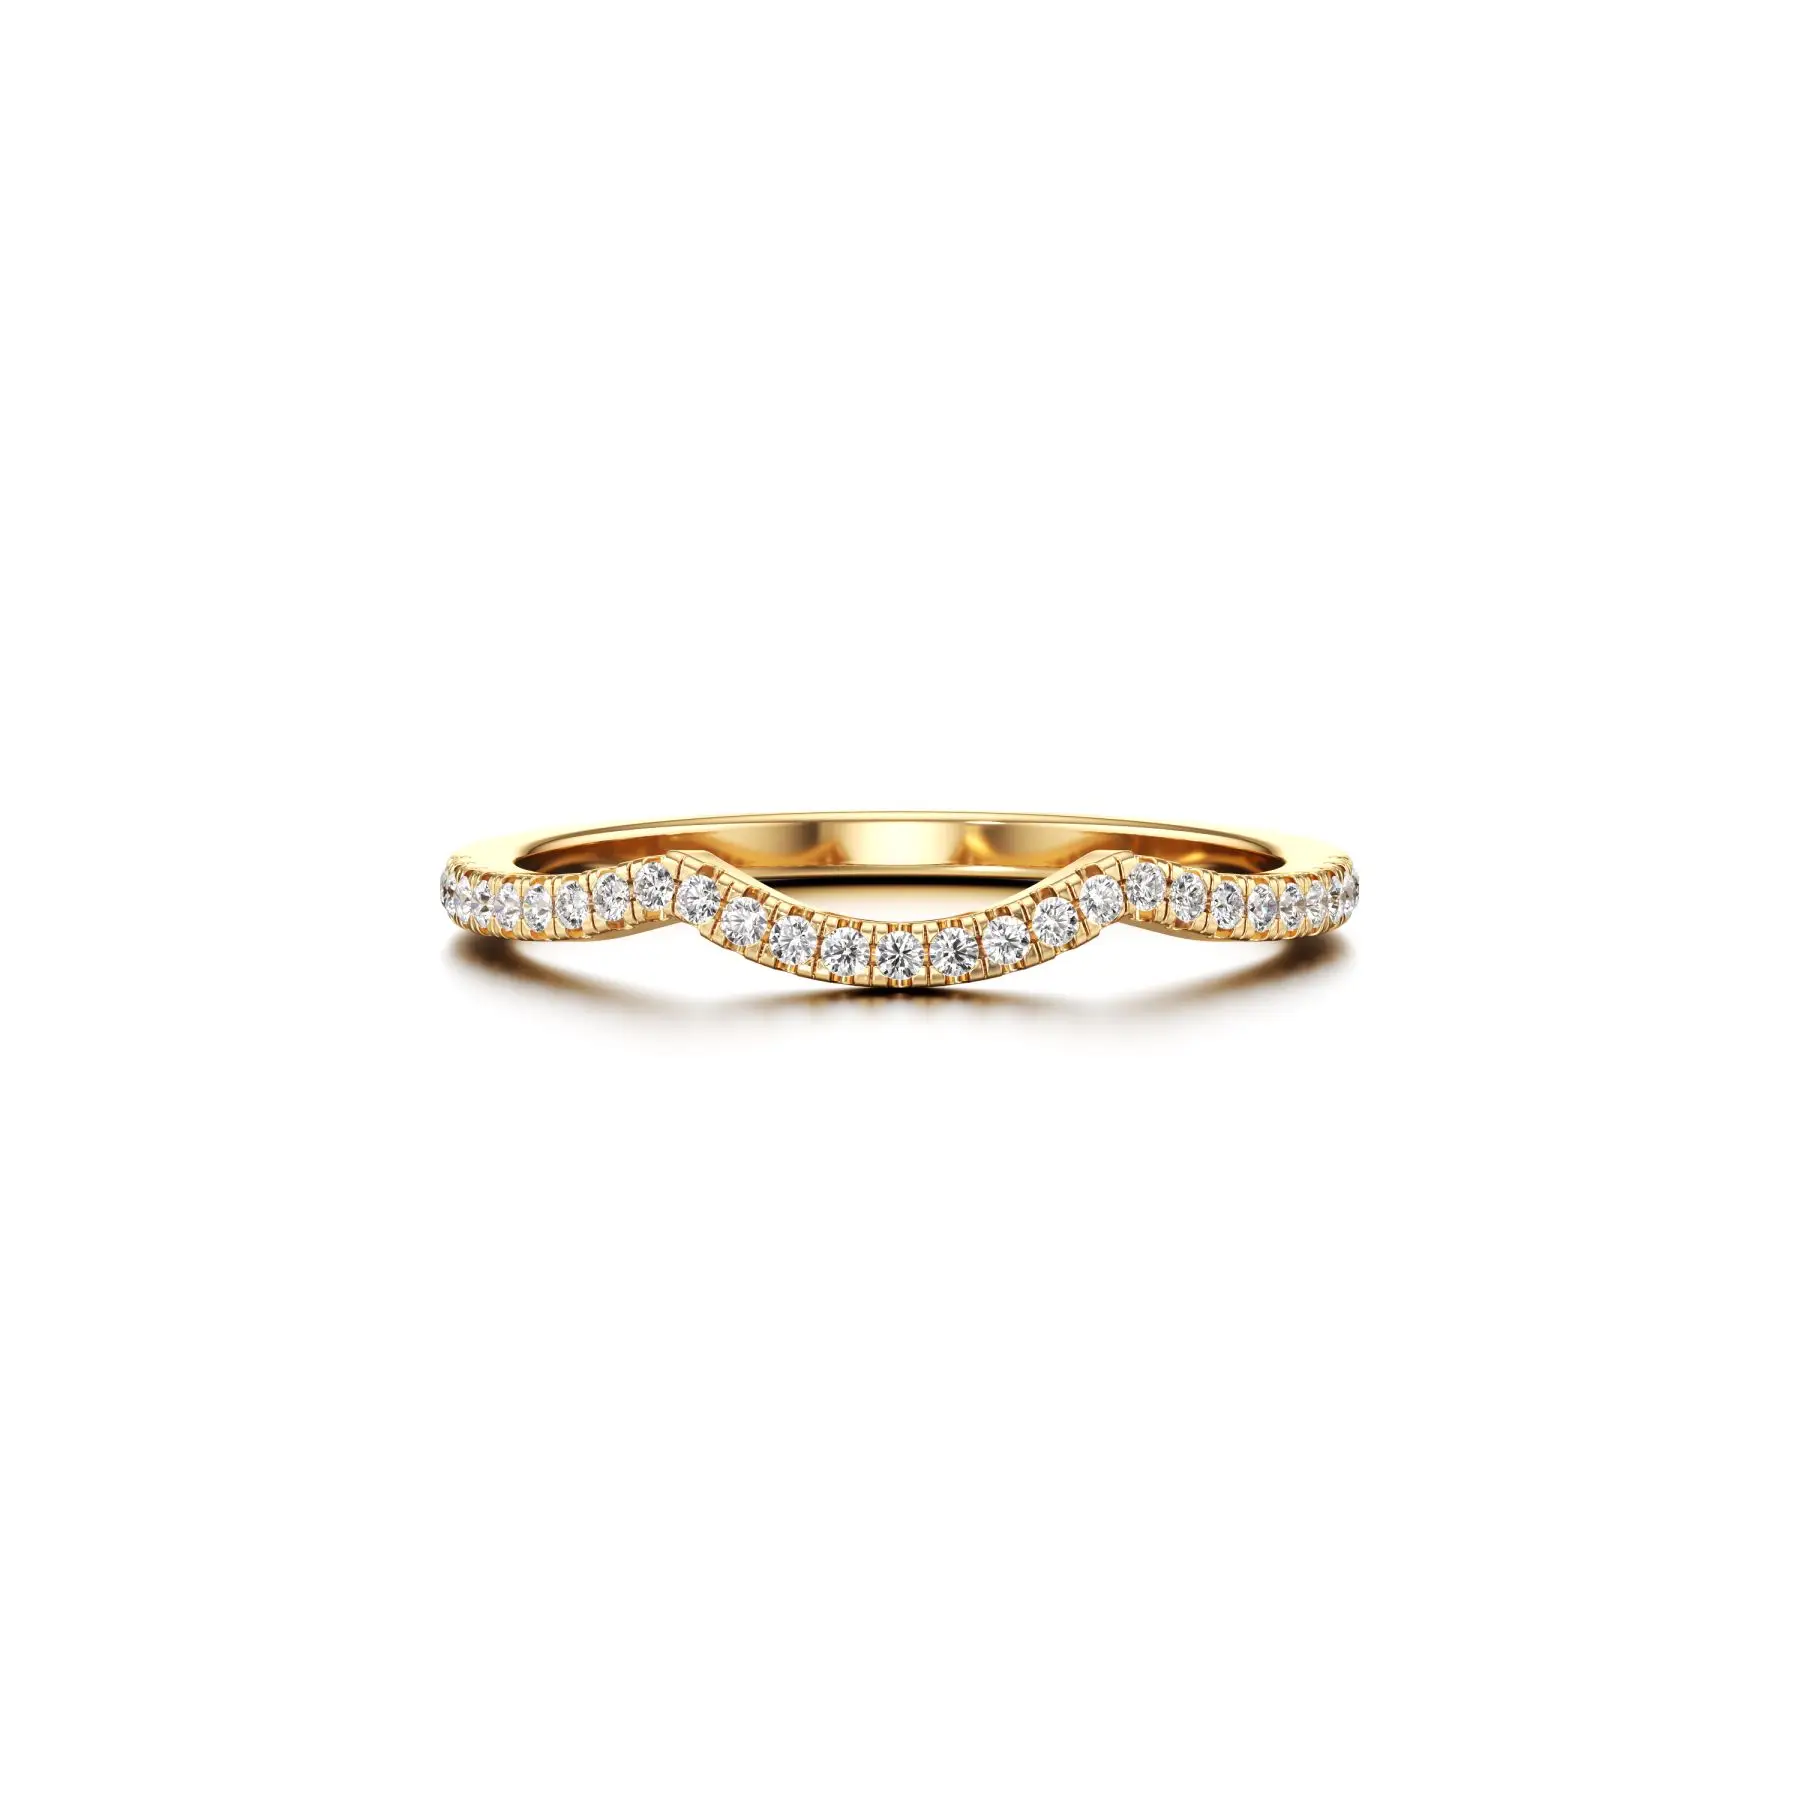 Wavy Ring Band Diamond Ring in Yellow 10k Gold